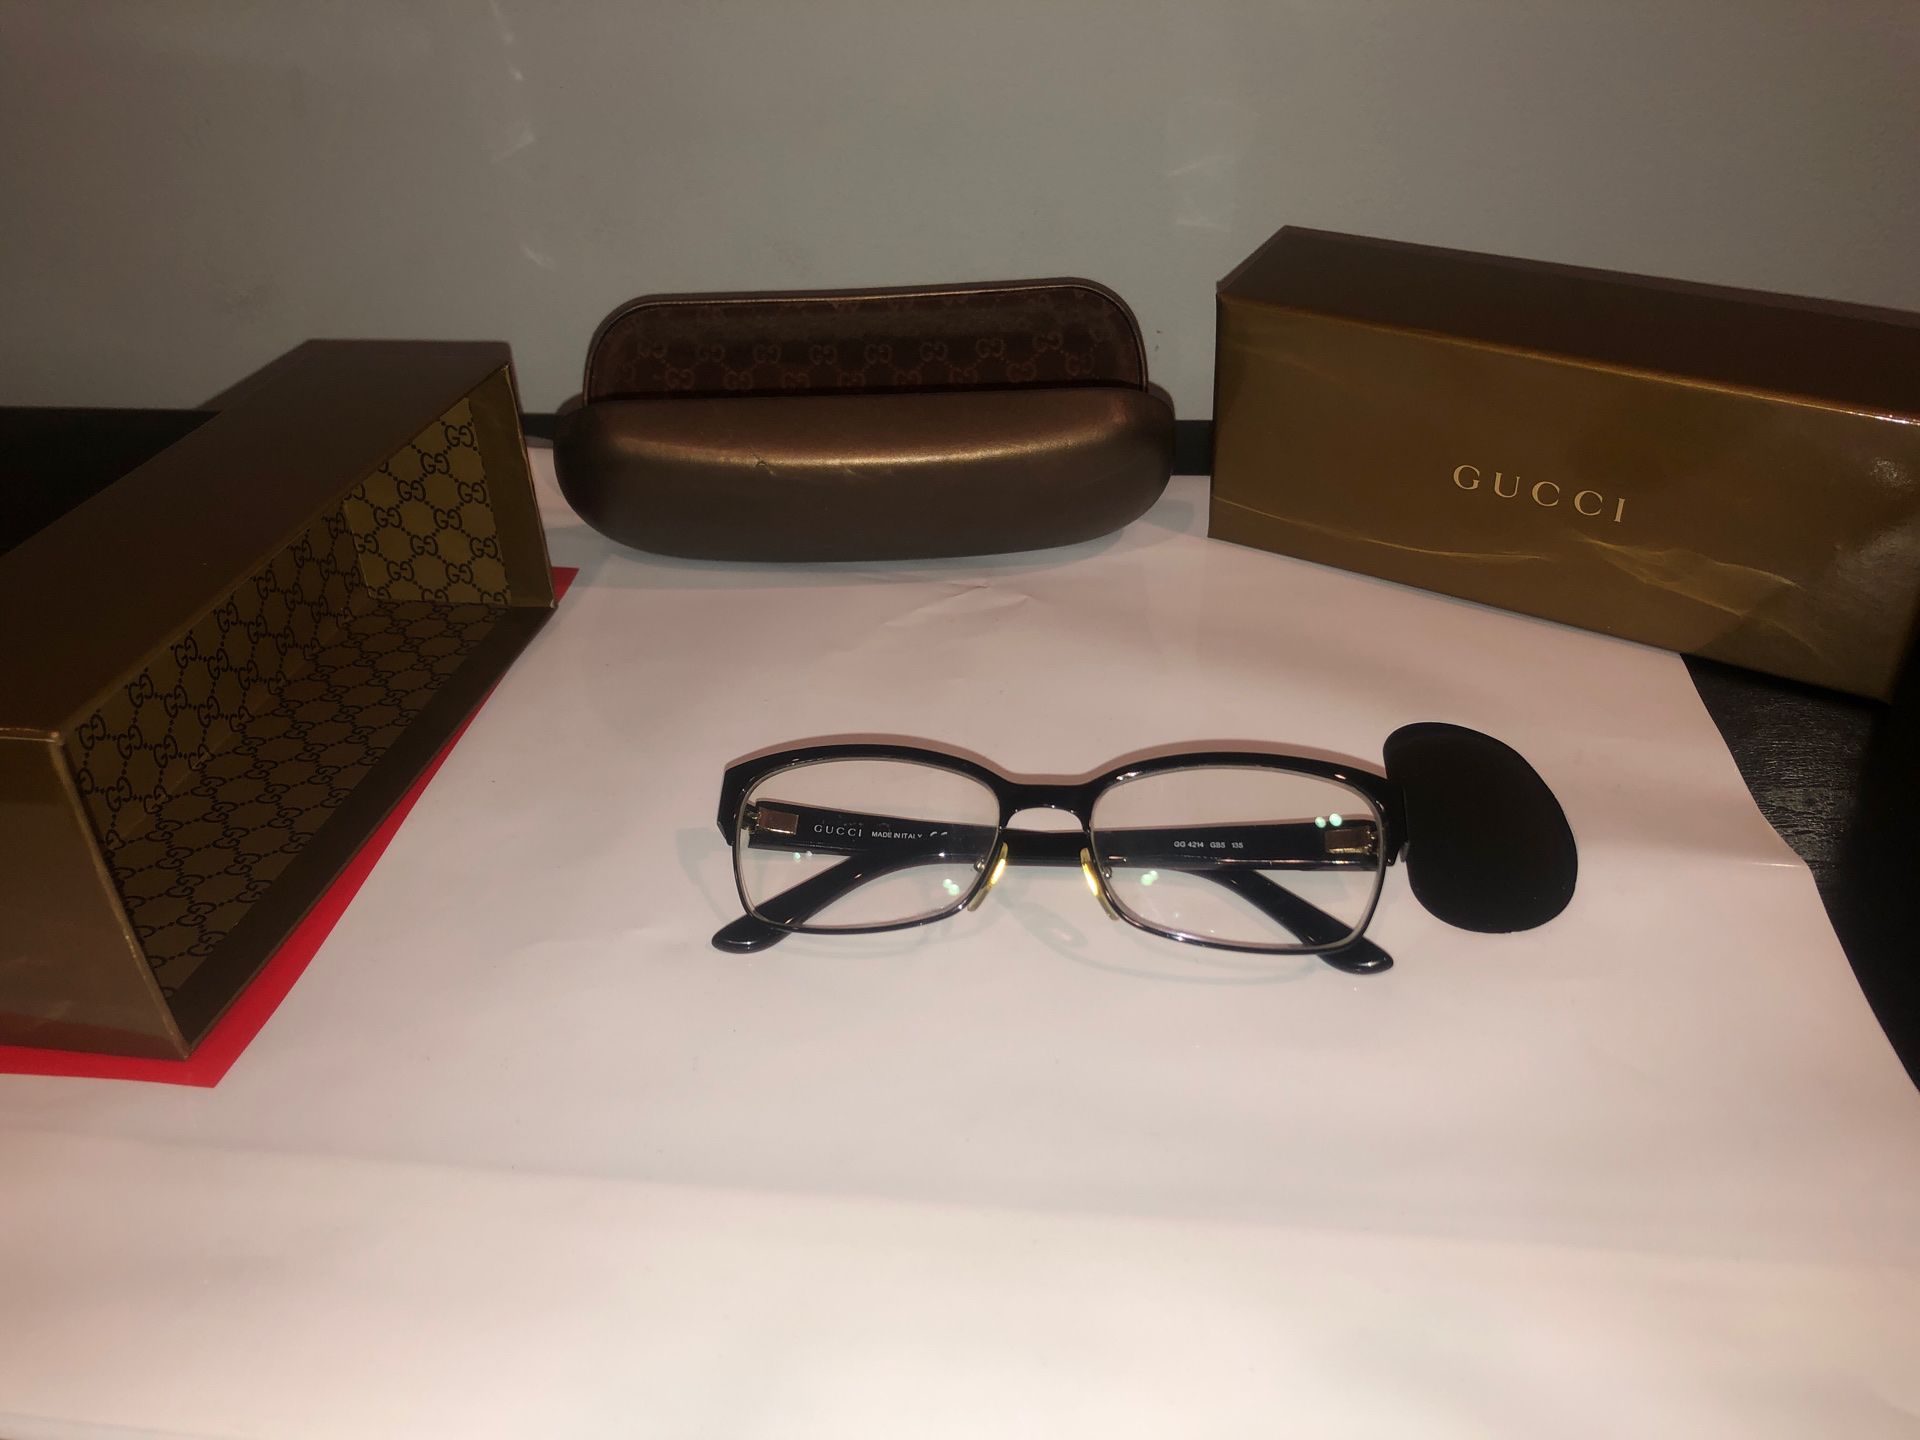 Gucci eye glasses frames